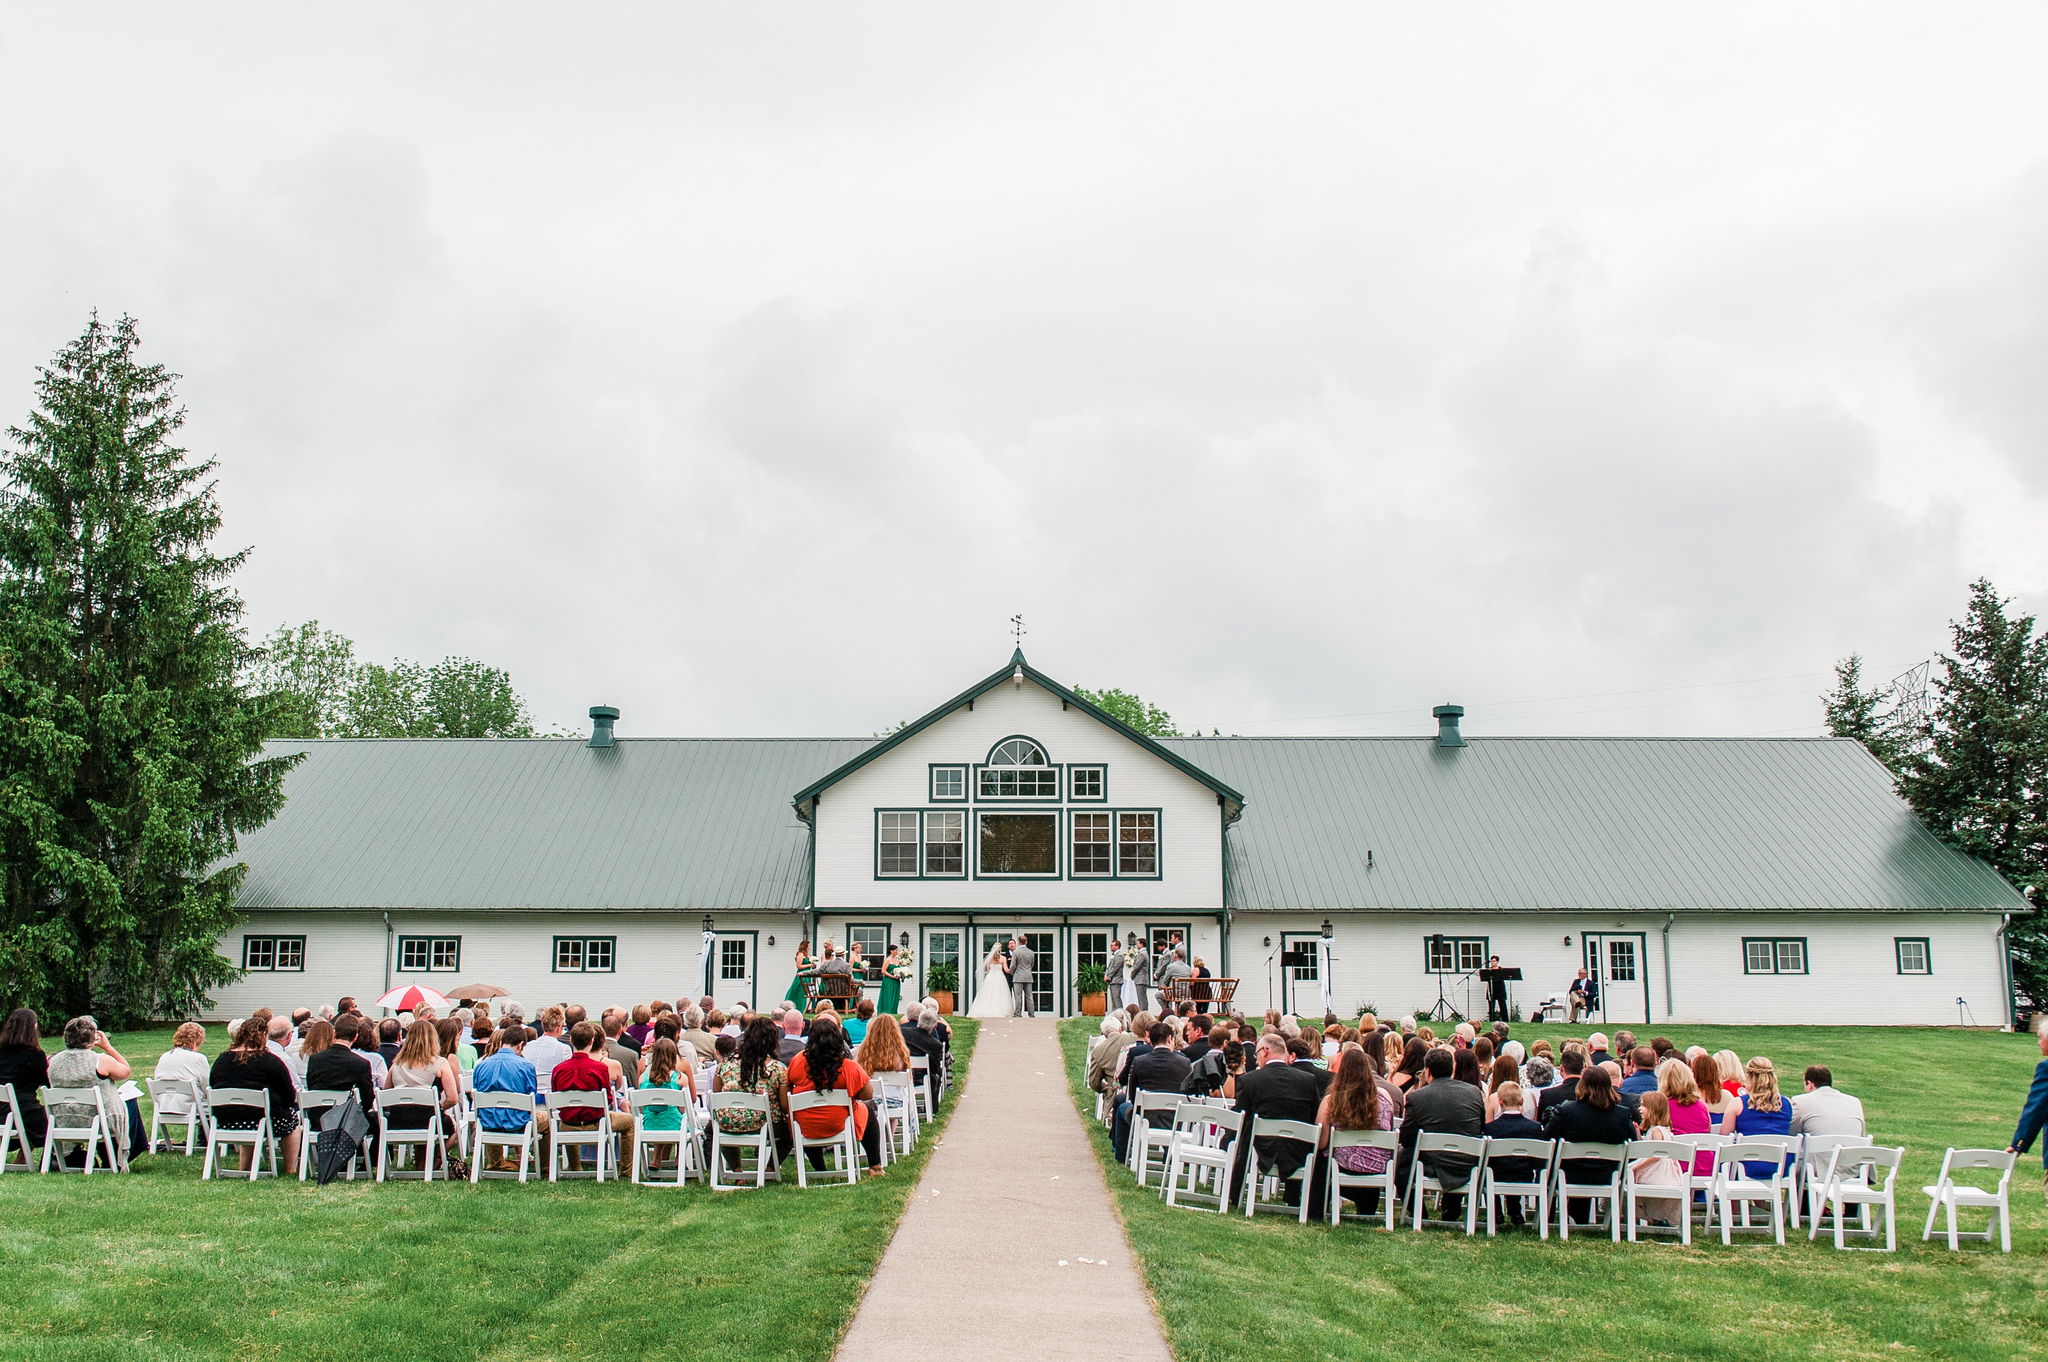 Little Brooks Meadow barn wedding venue ohio